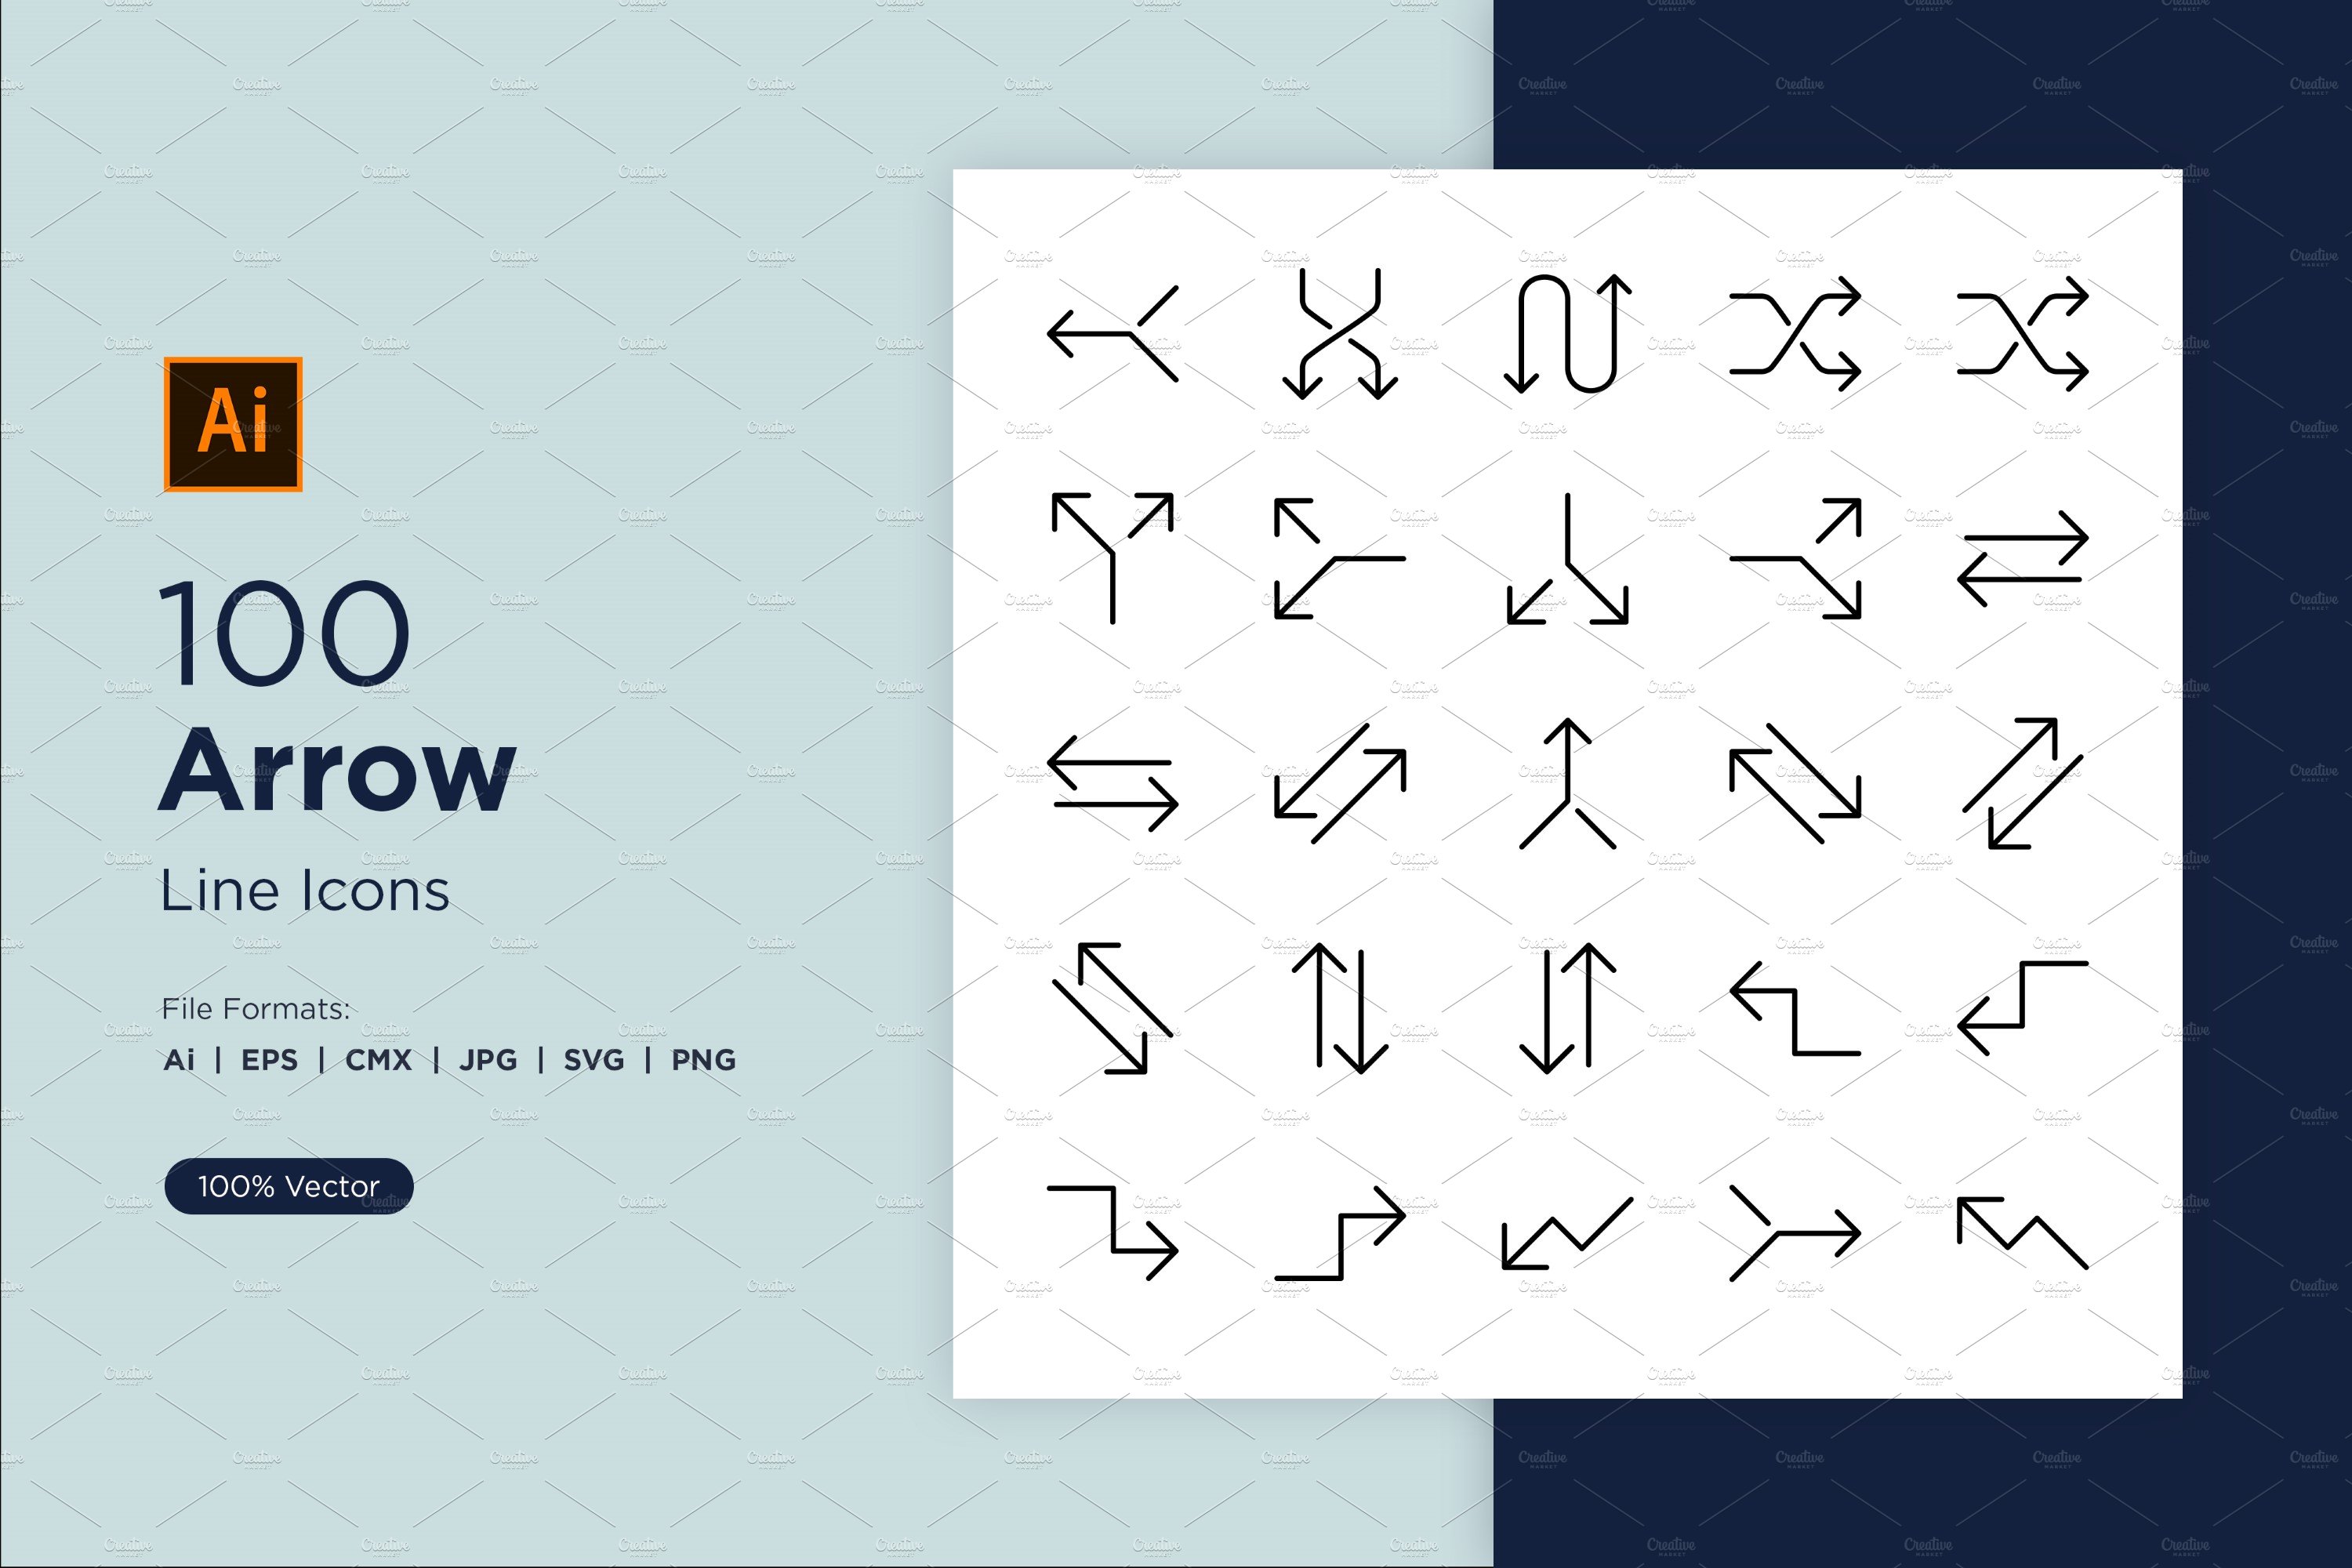 100 Arrow Line icon Set cover image.